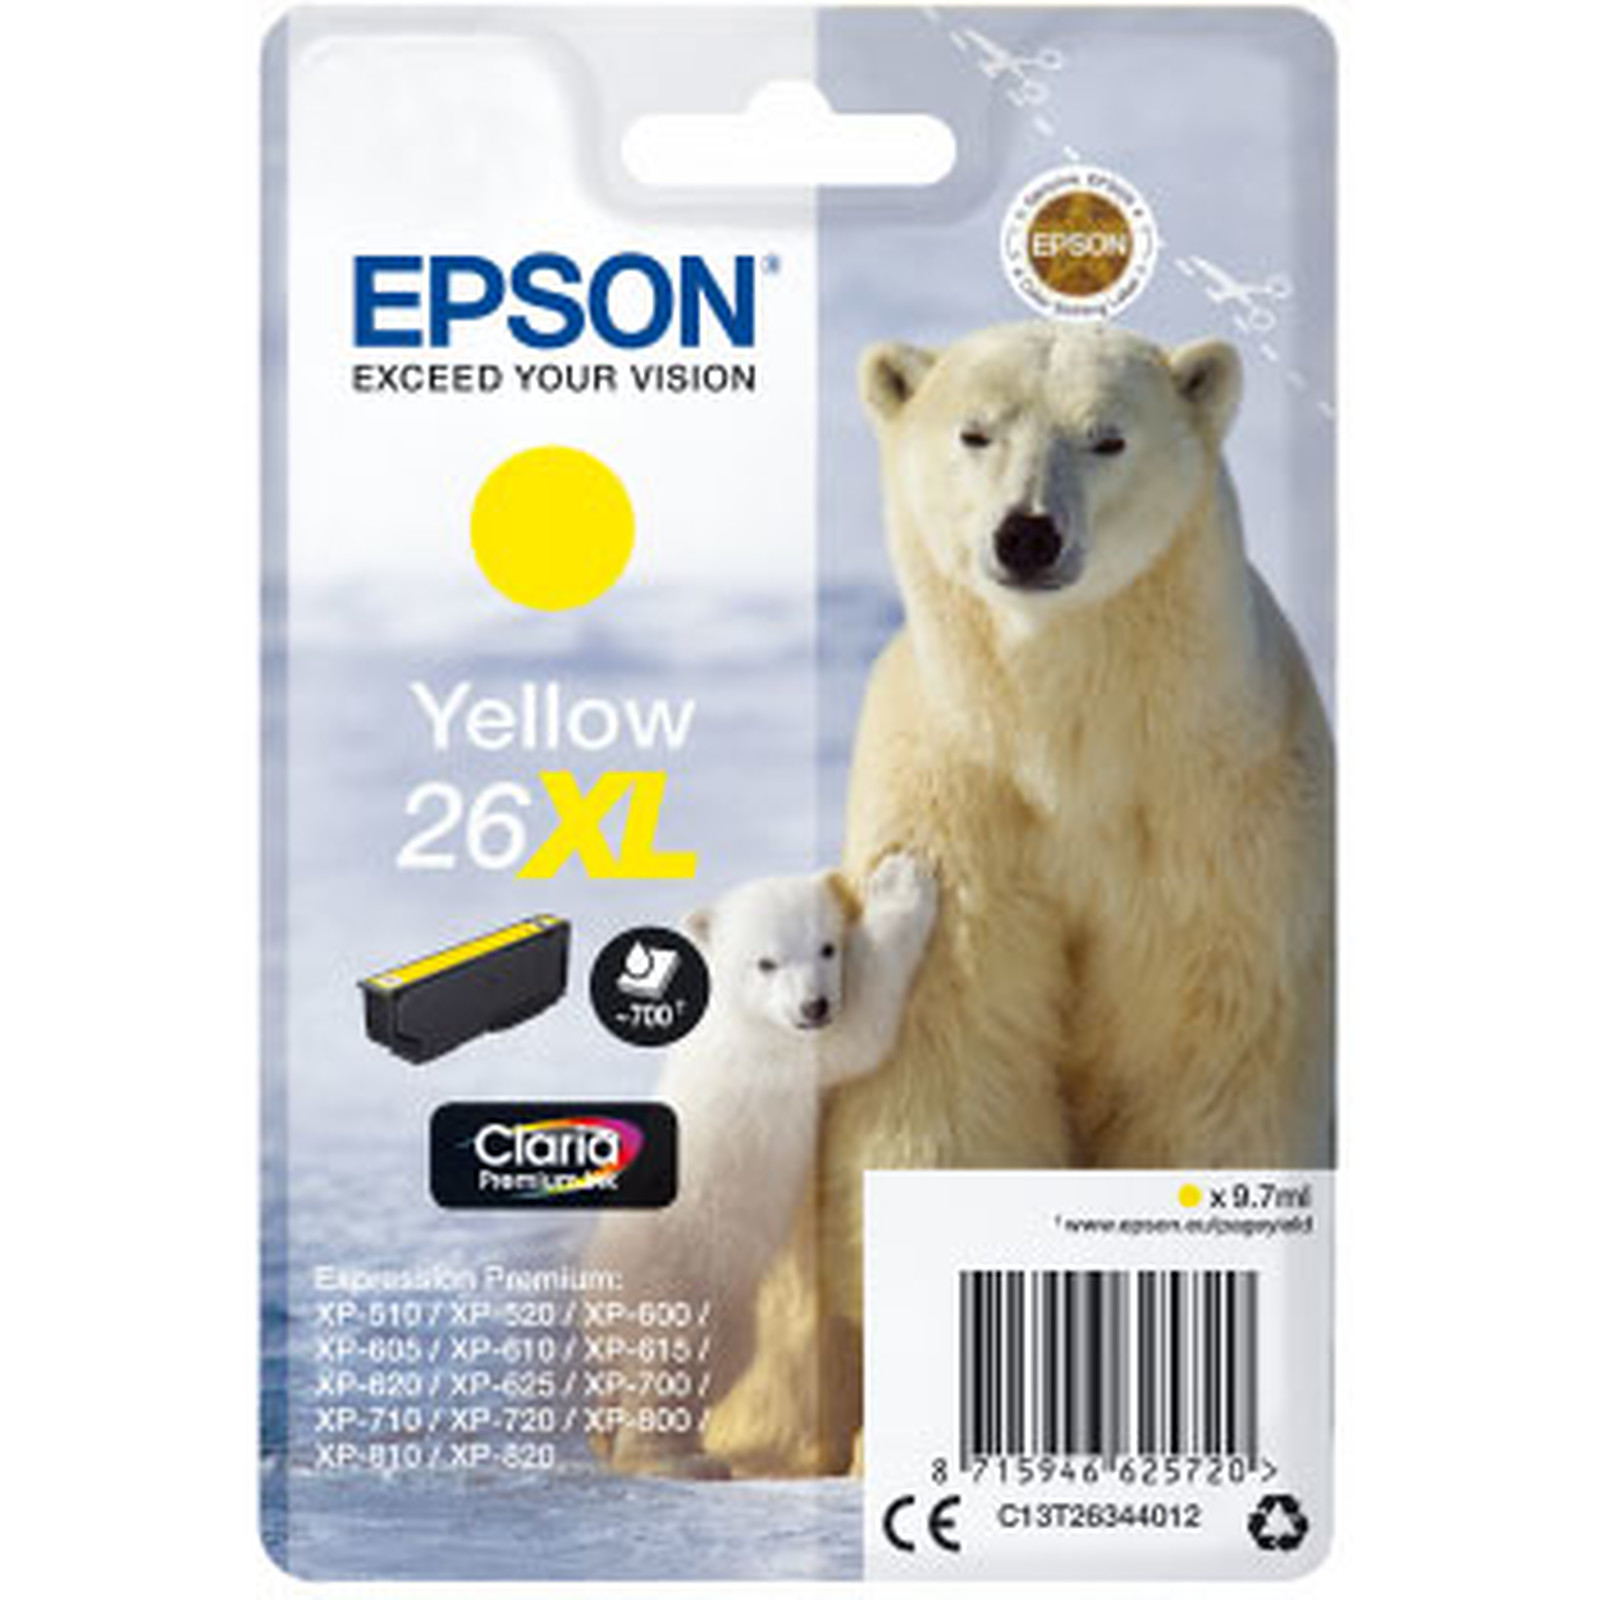 Epson Ours Polaire 26 XL Jaune - Cartouche imprimante Epson